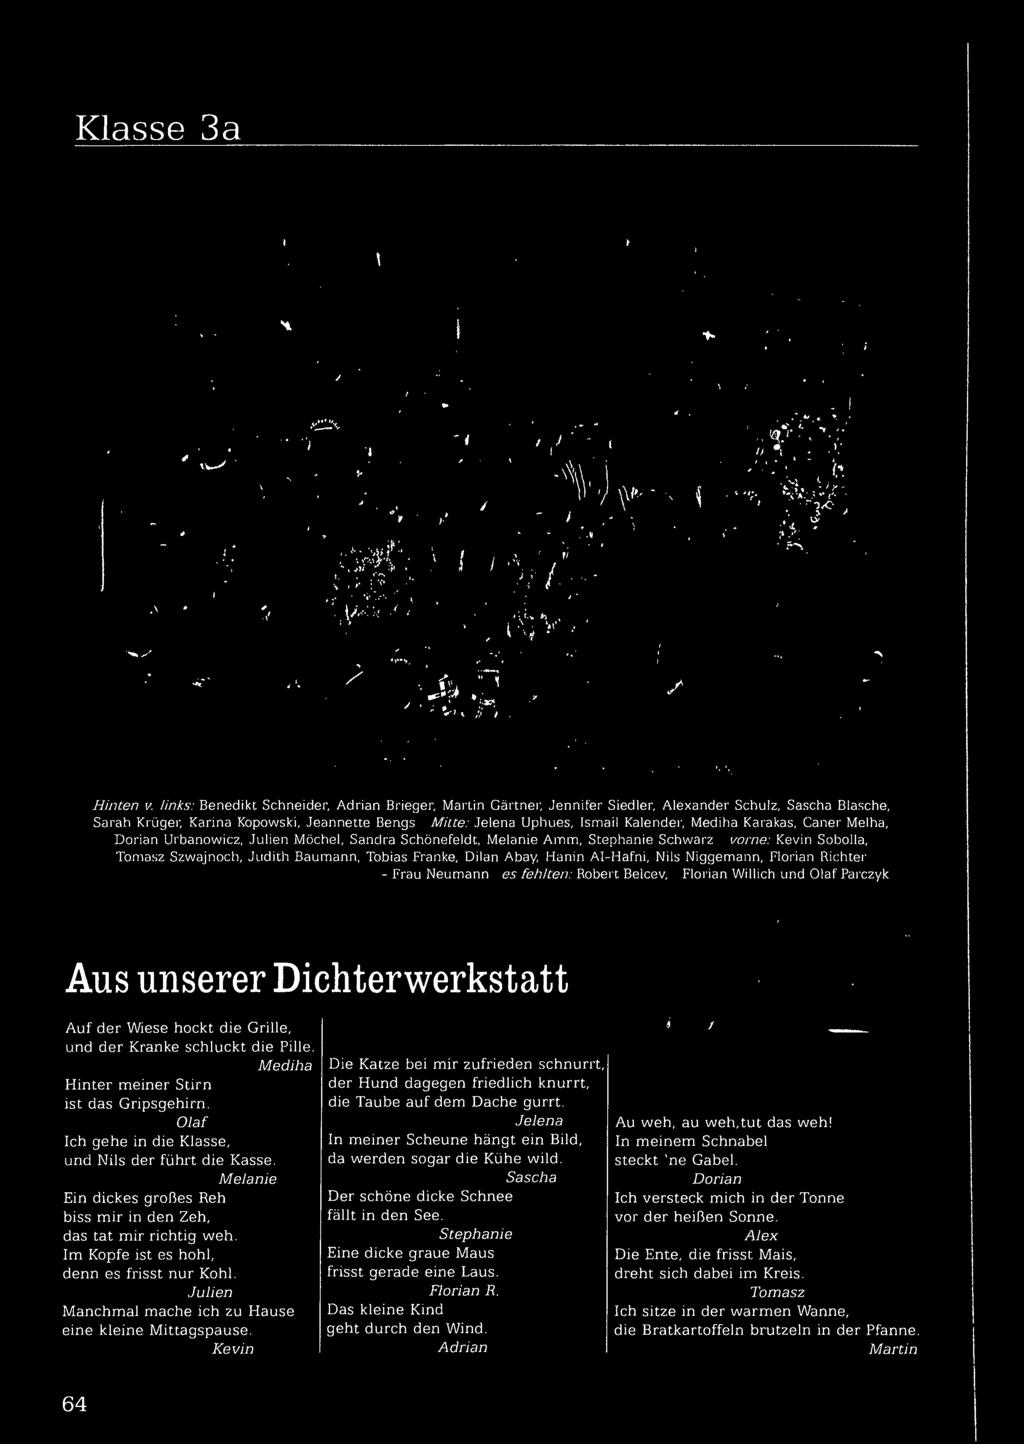 Klasse 3a Hinten v. Jinks: Benedikt Schneider, Adrian Brieger. Martin Gärtner, Jennifer Siedler, Alexander Schulz, Sascha Blasehe. Sarah Krüqer, Karina Kopowski.